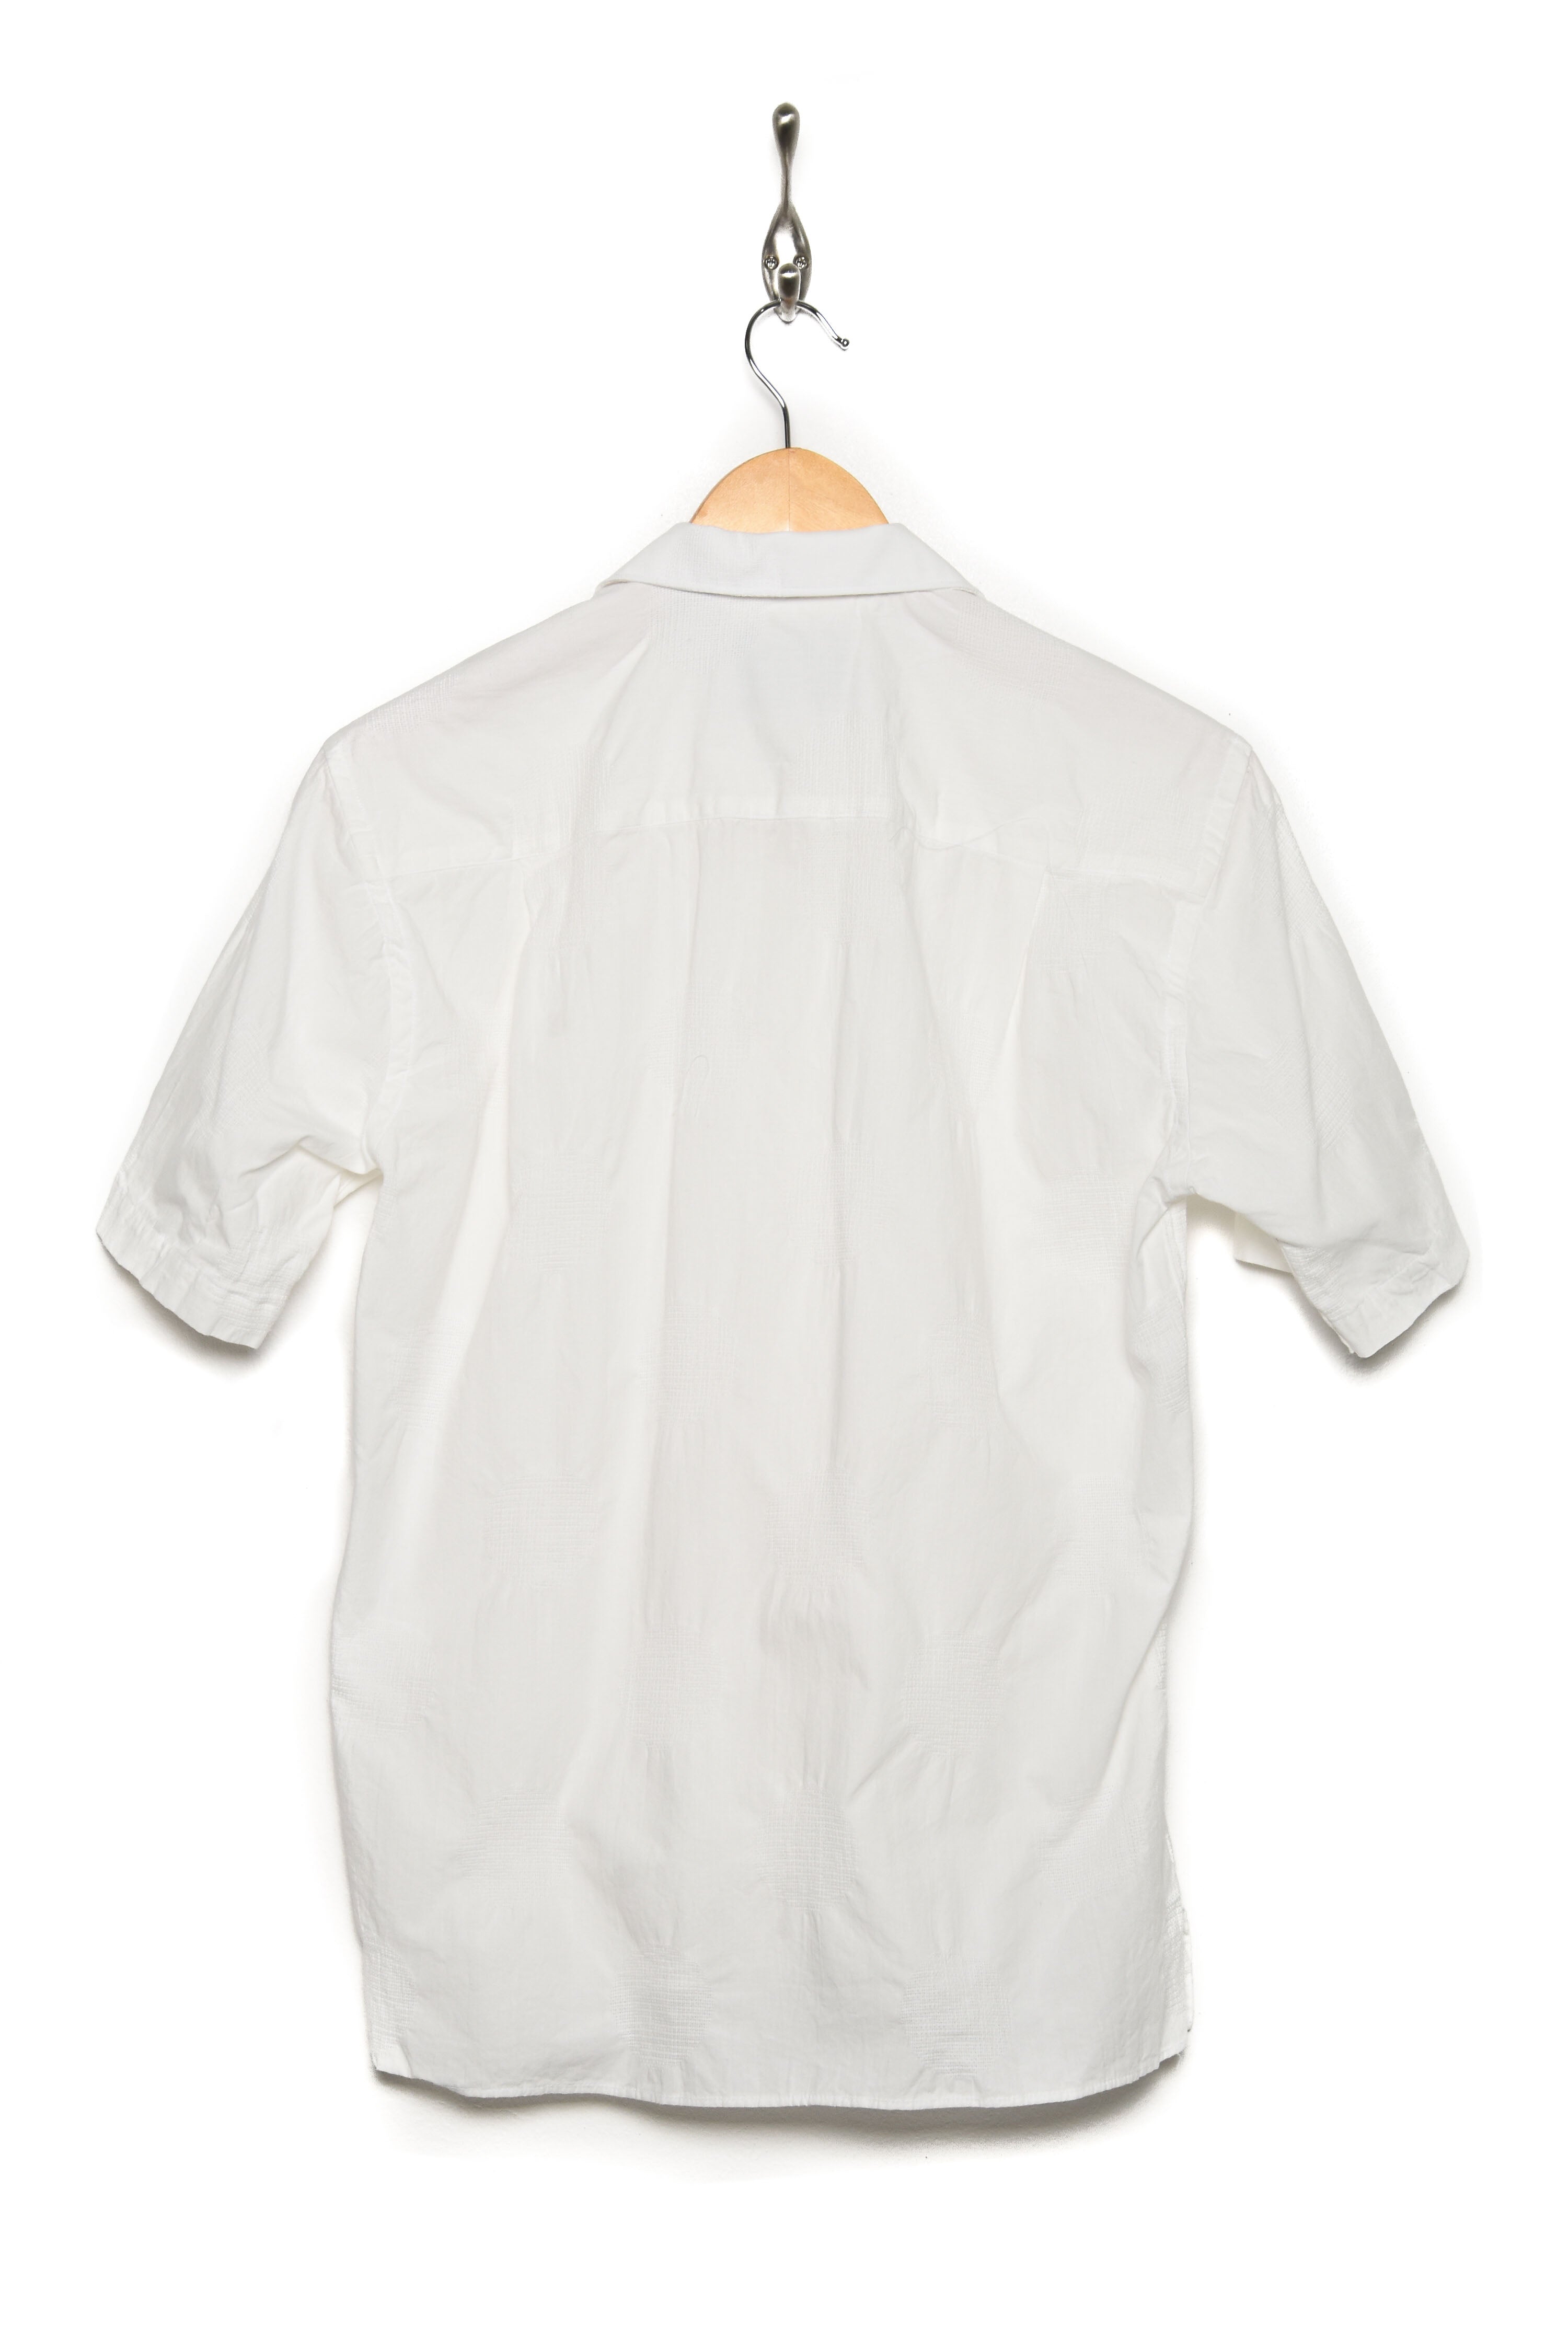 Gitman Brothers Vintage Camp Shirt white jacquard dots